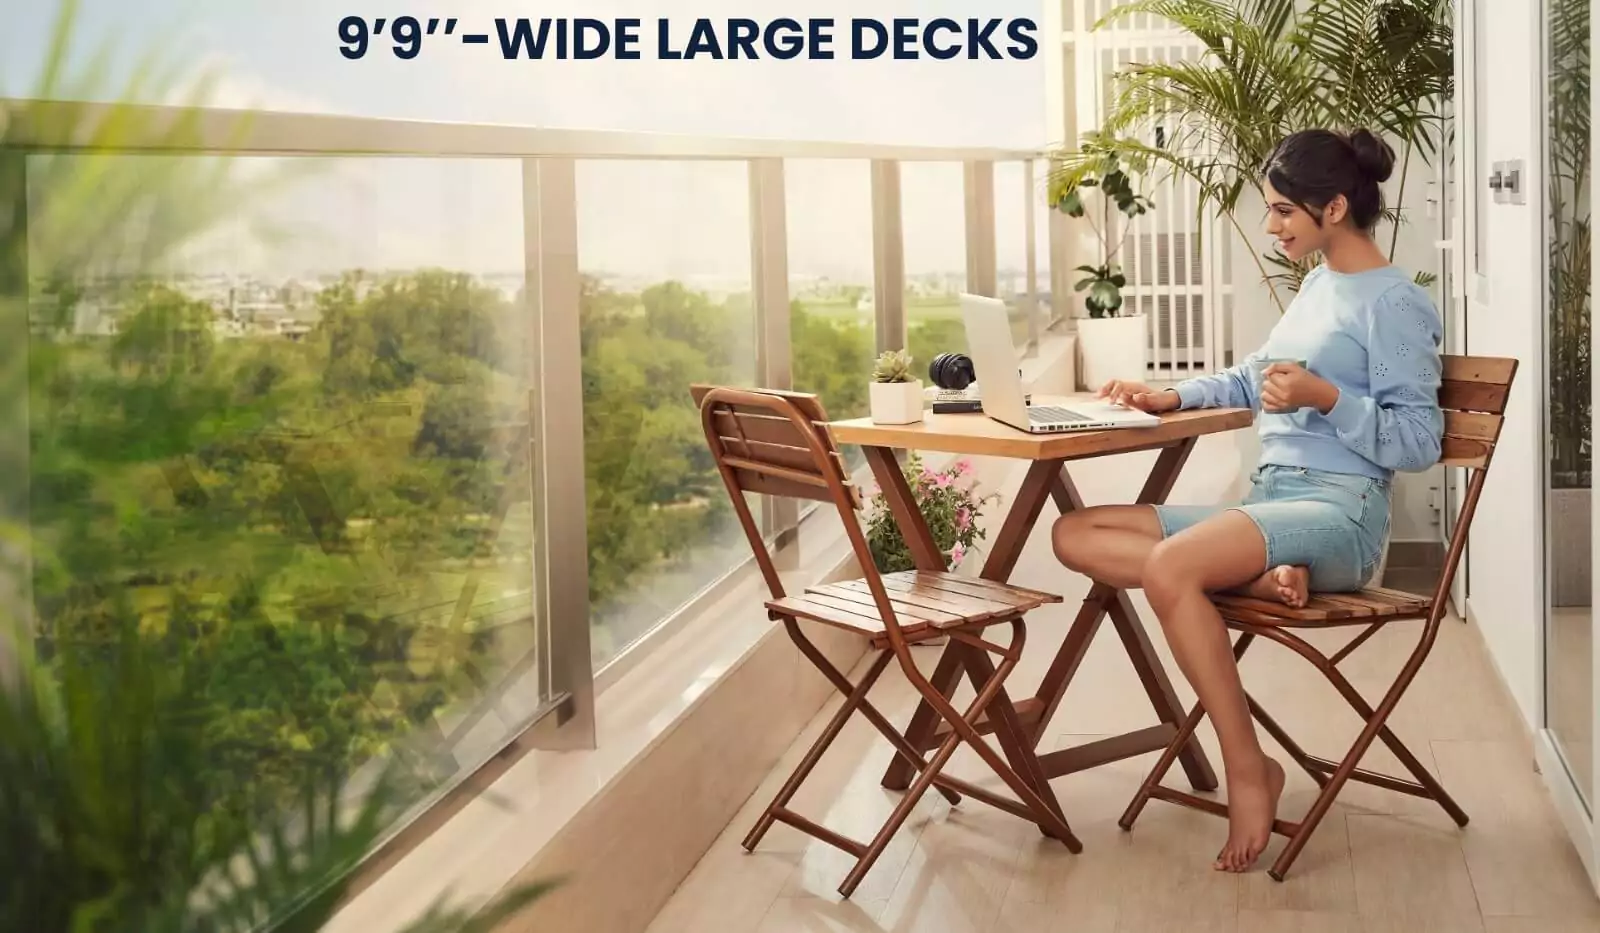 Wide Large Decks